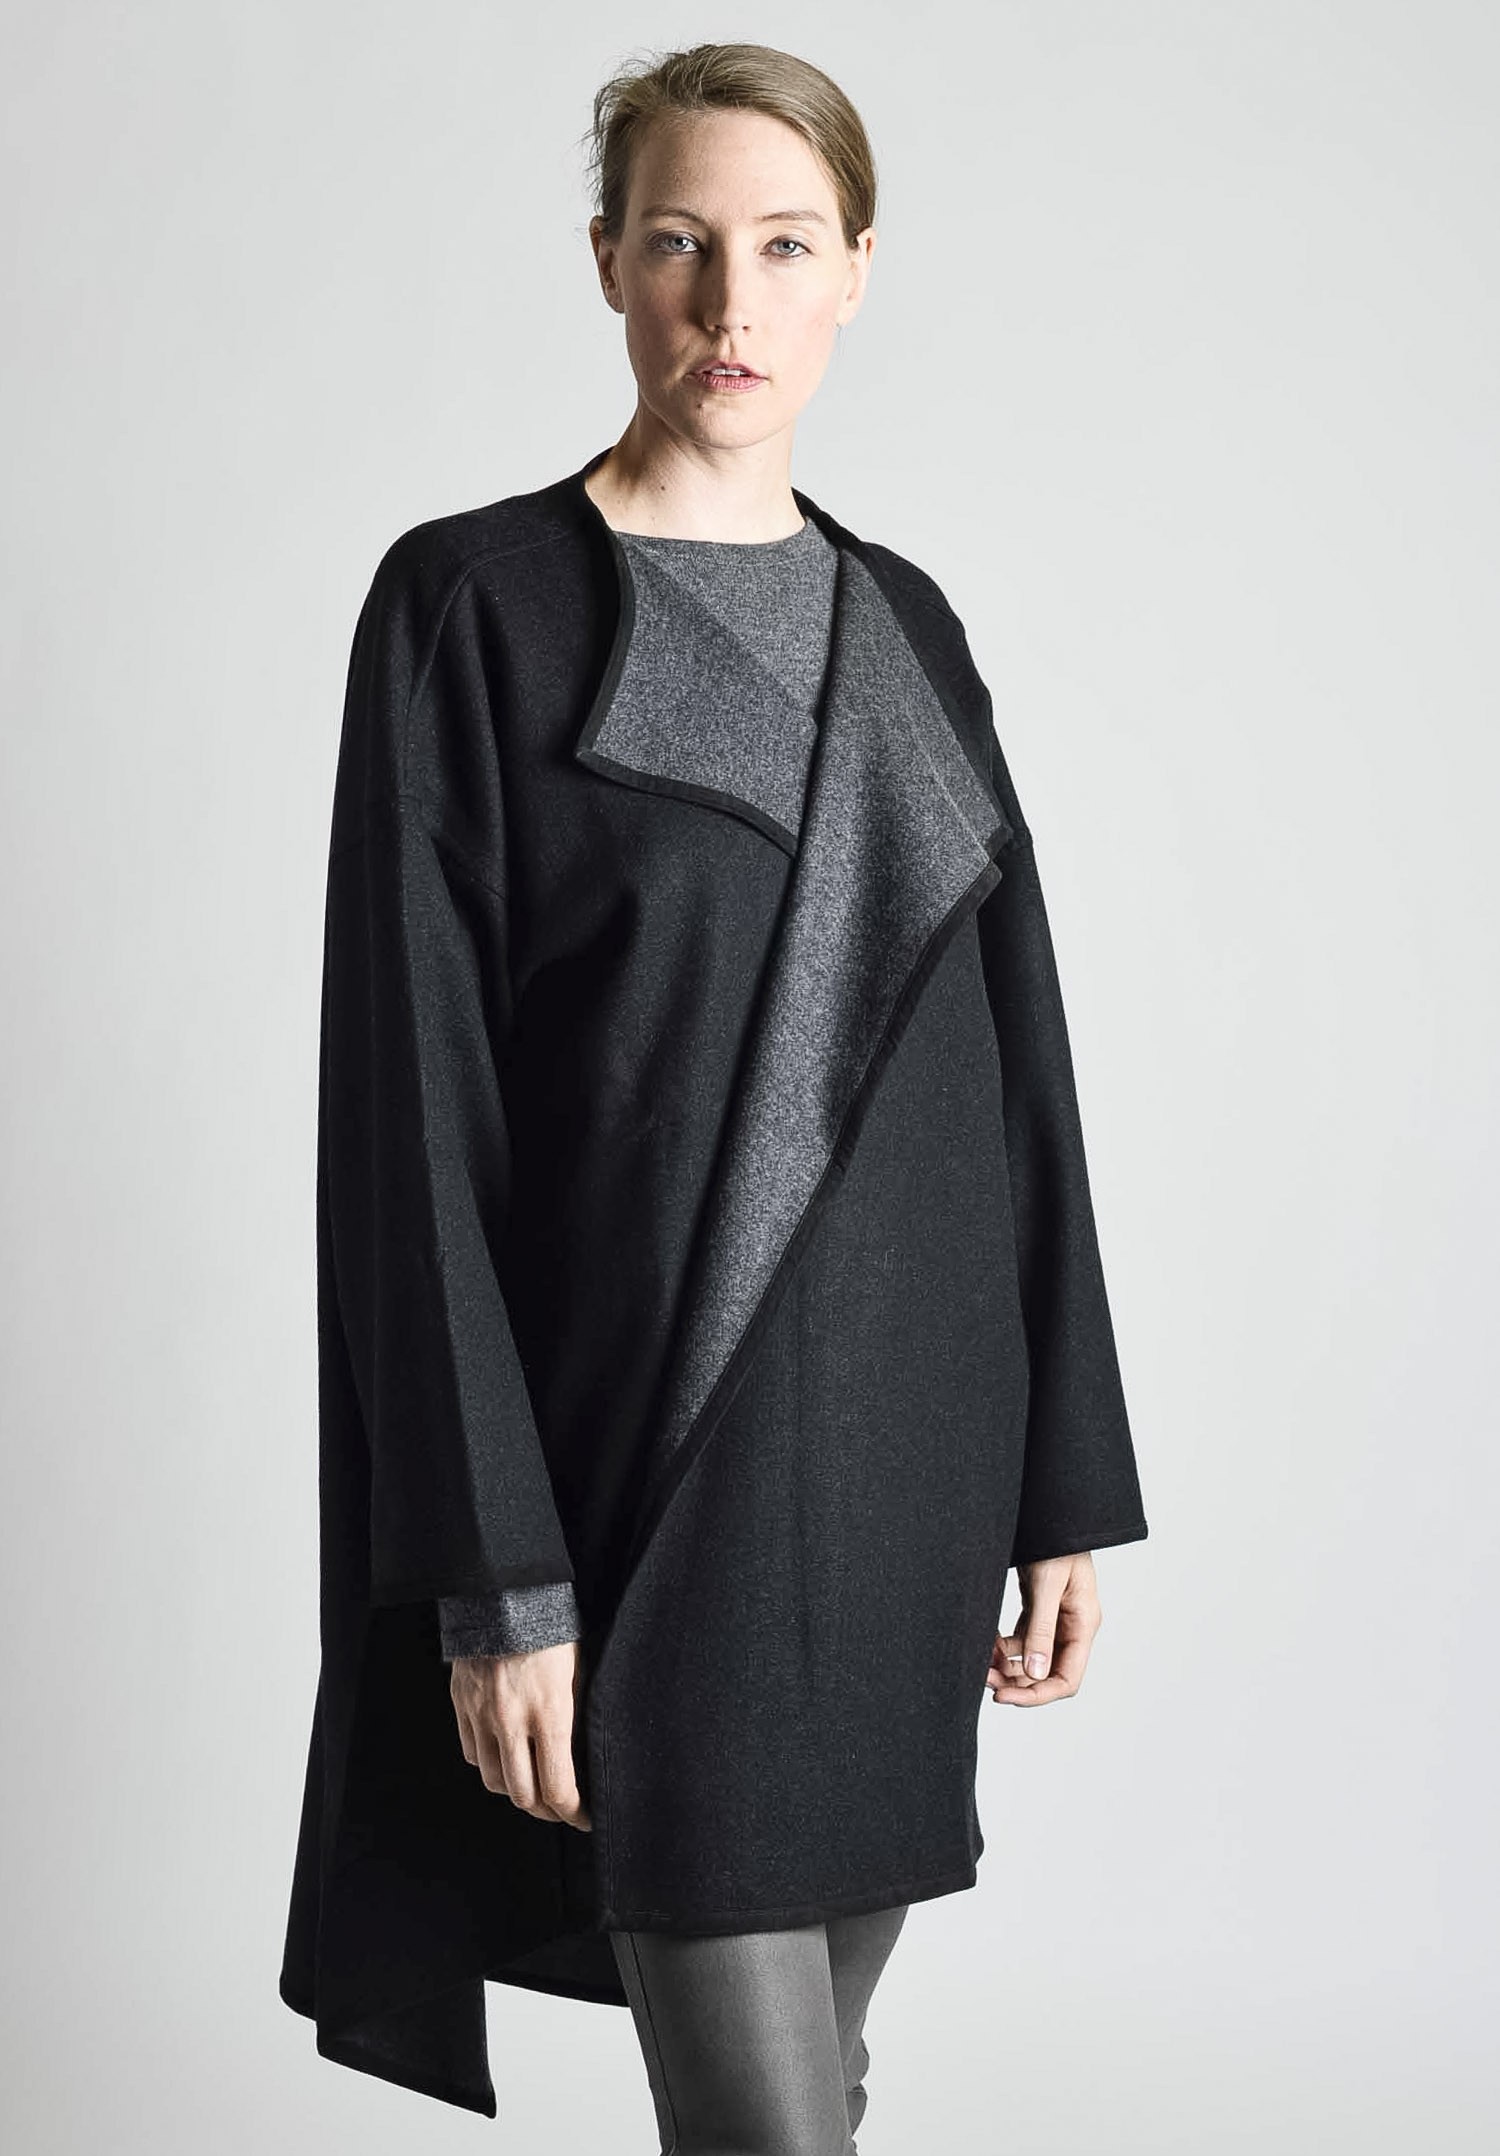 Eskandar Cashmere Jacket in Black/Charcoal | Santa Fe Dry Goods Trippen ...